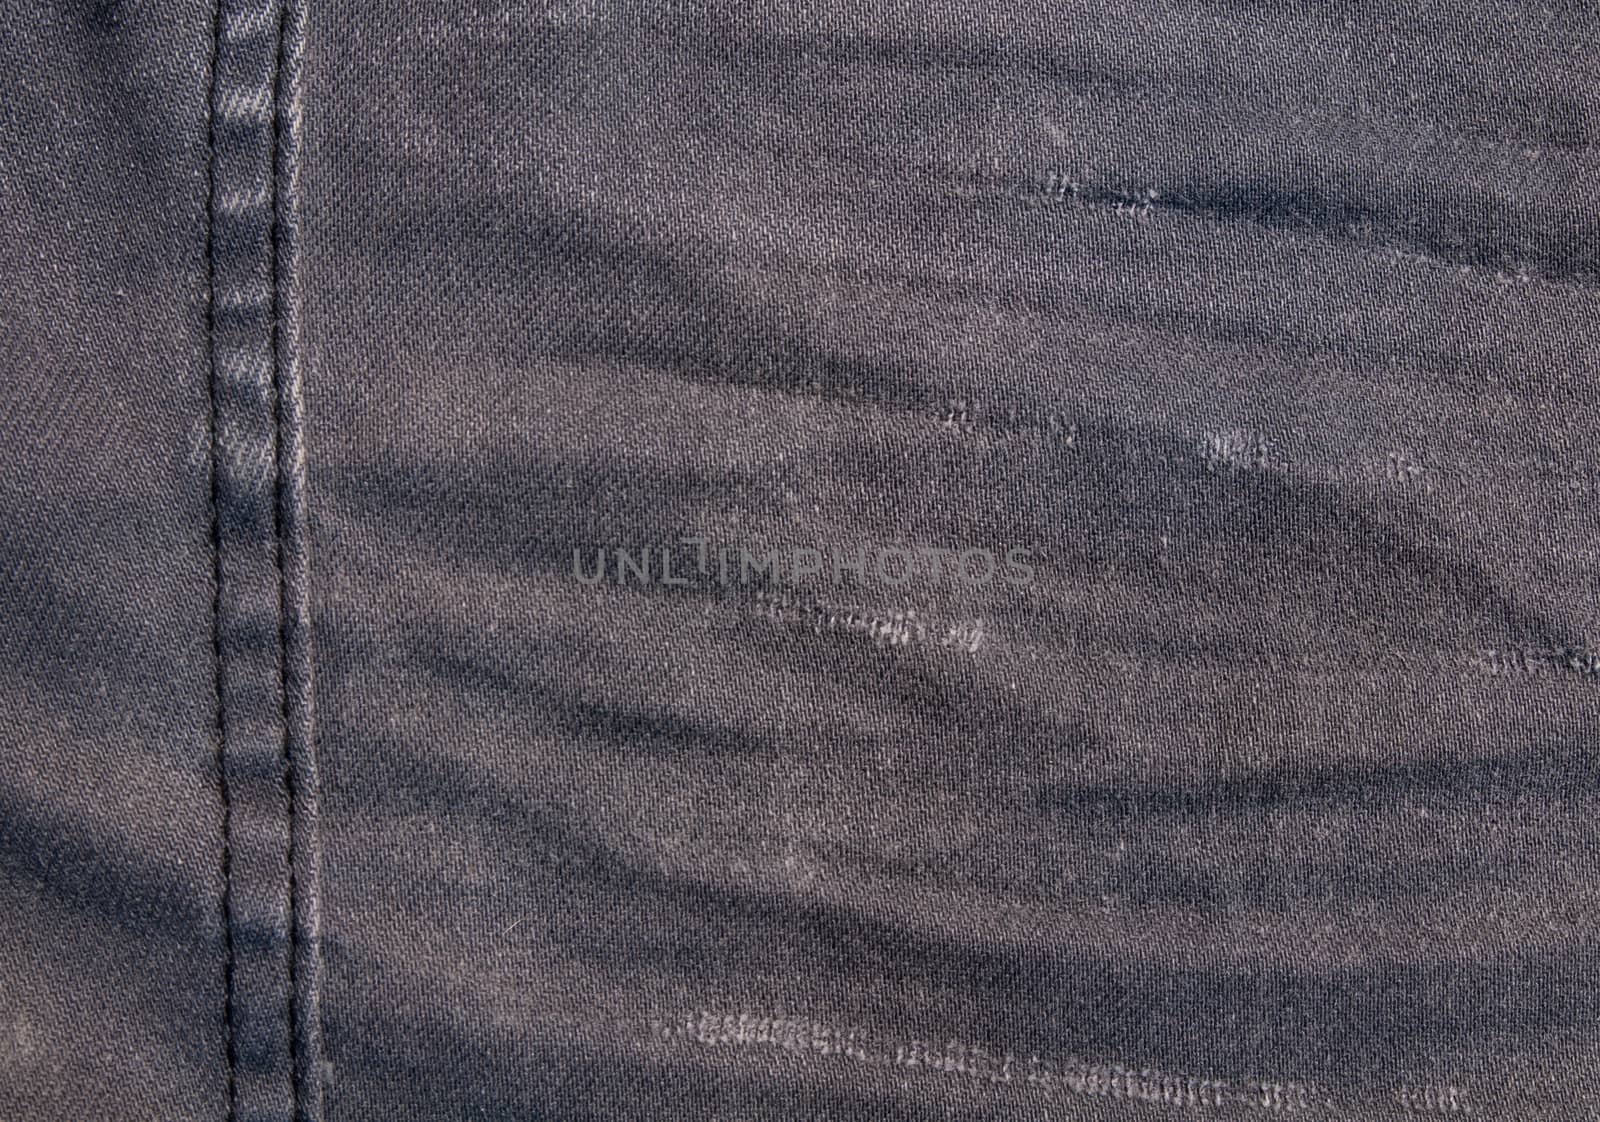 Jeans texture background  by Sorapop